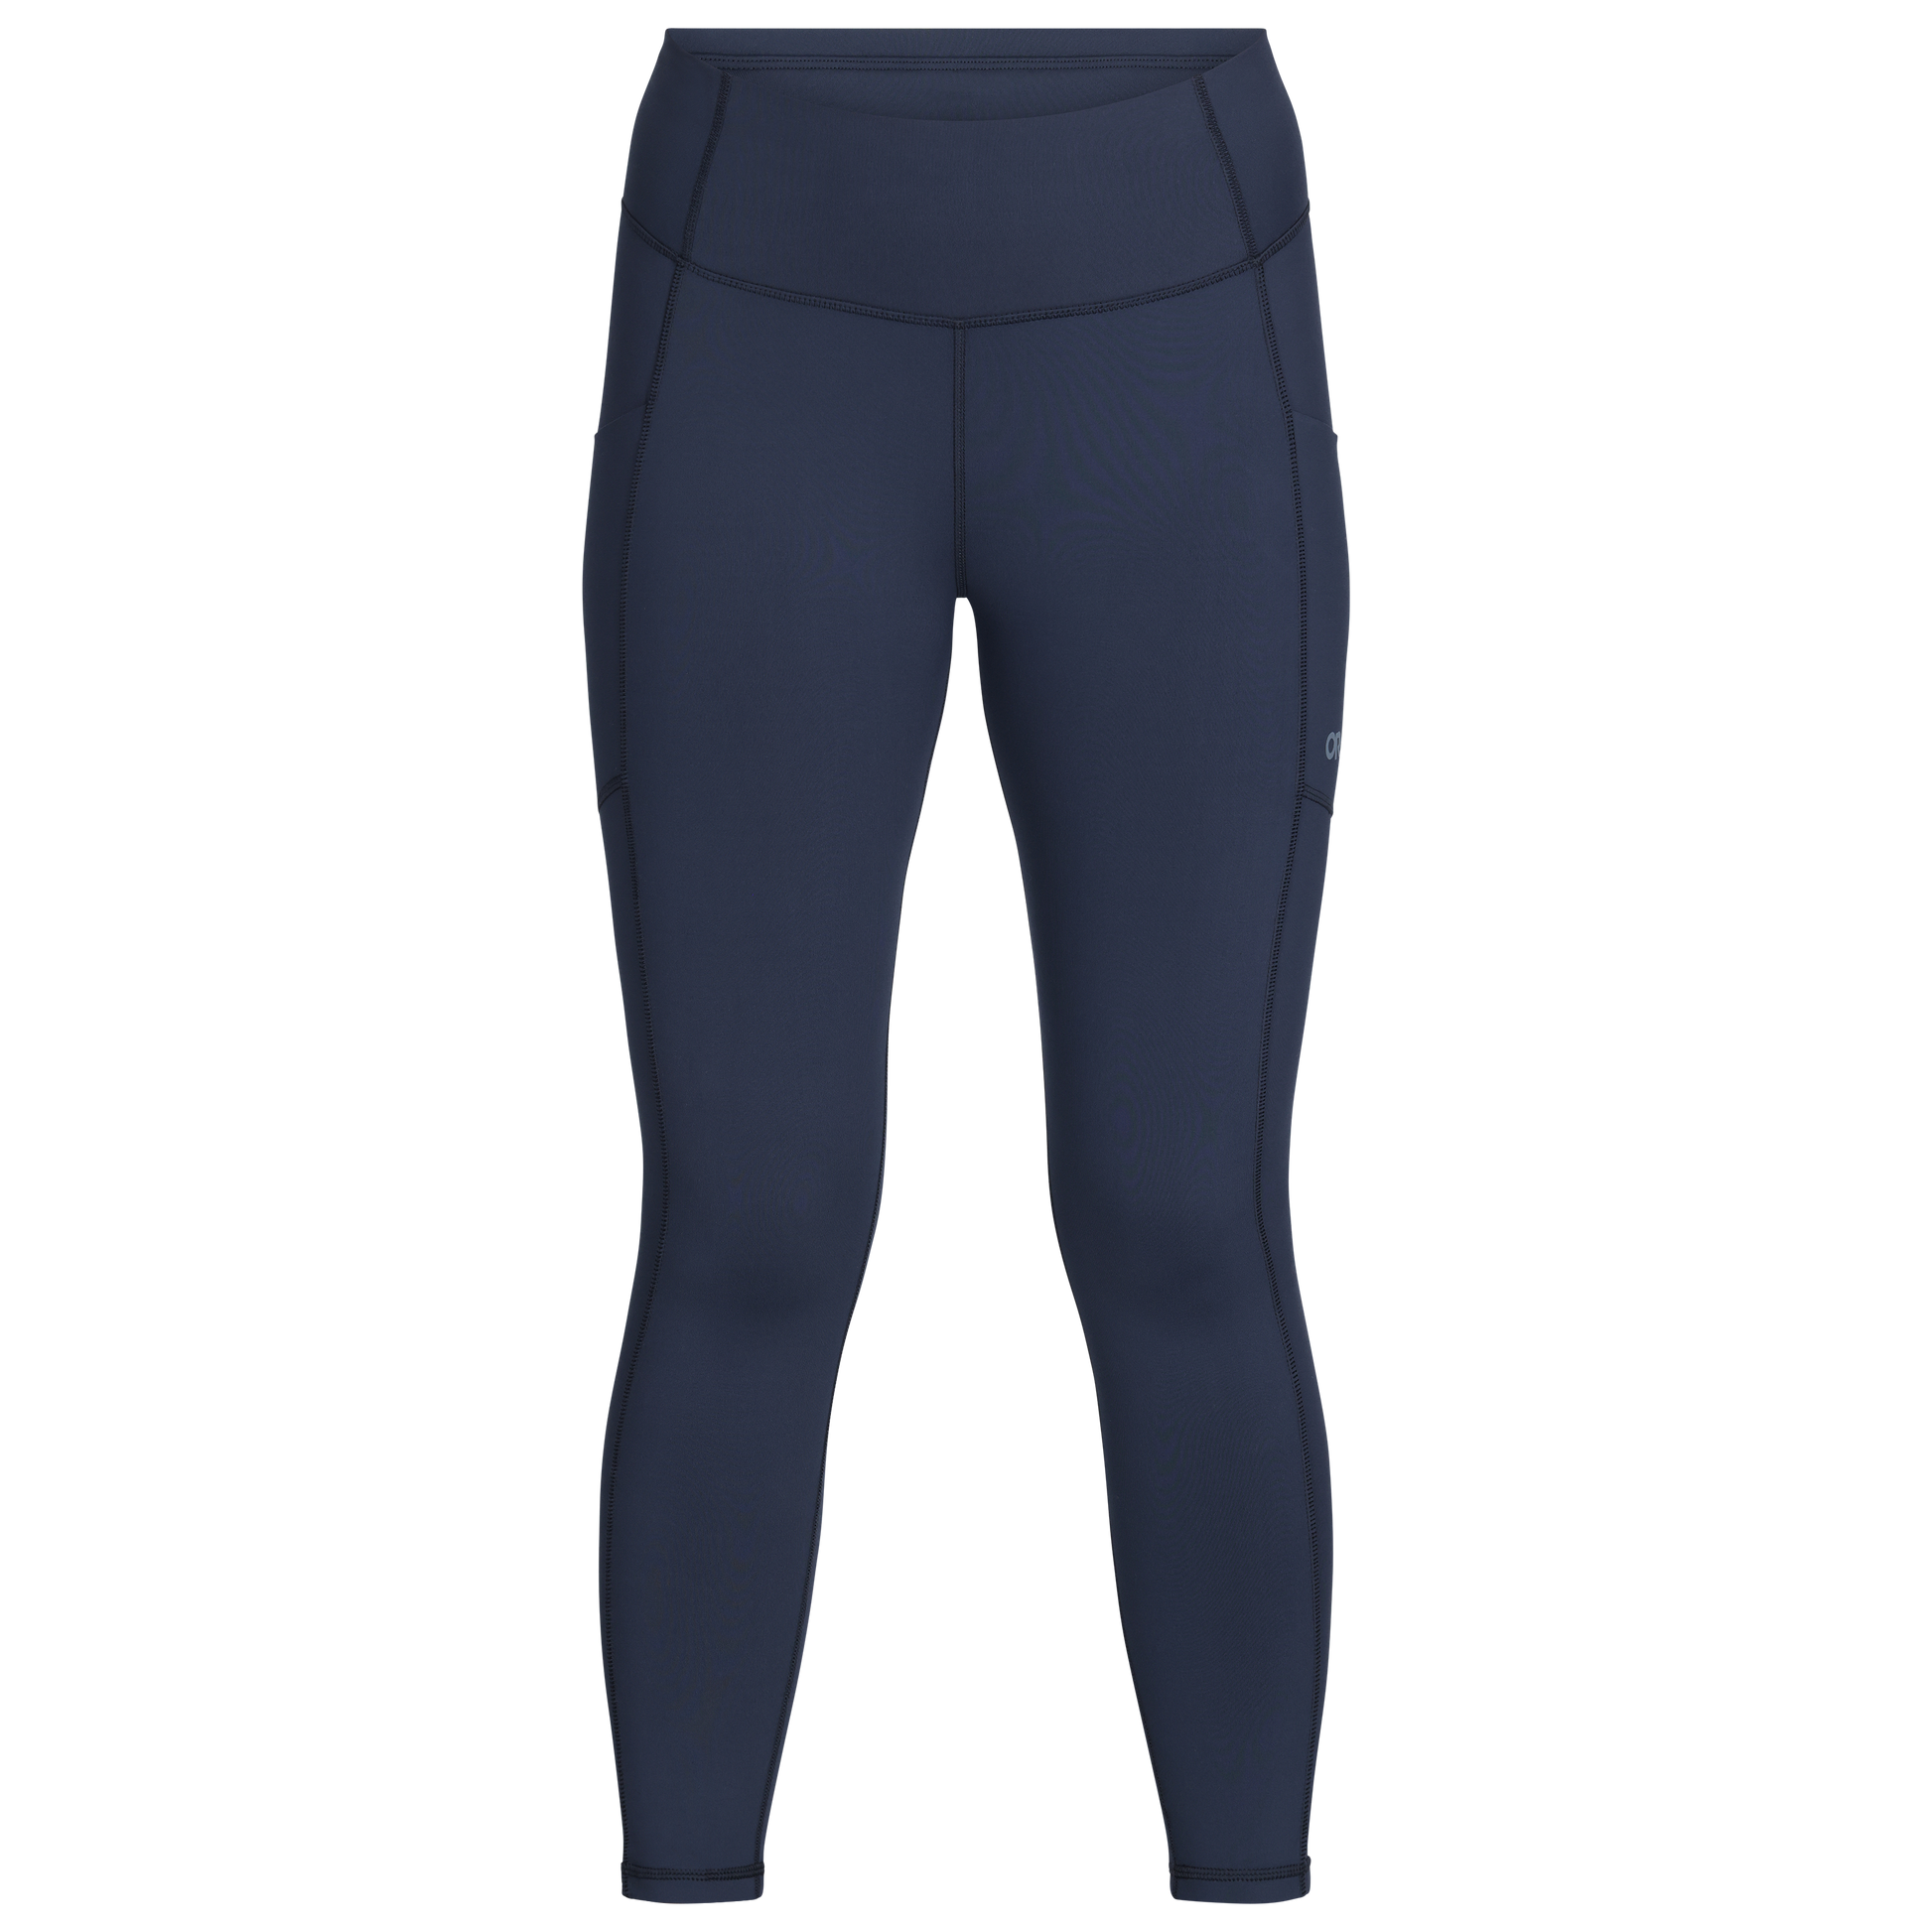 Beige Full-Length Sports Leggings Composition- Polyamide 74% Spandex/Elastane  26% Women Western Wear Tights Clothing Track Pants Regular Fit Mid Rise  Activewear